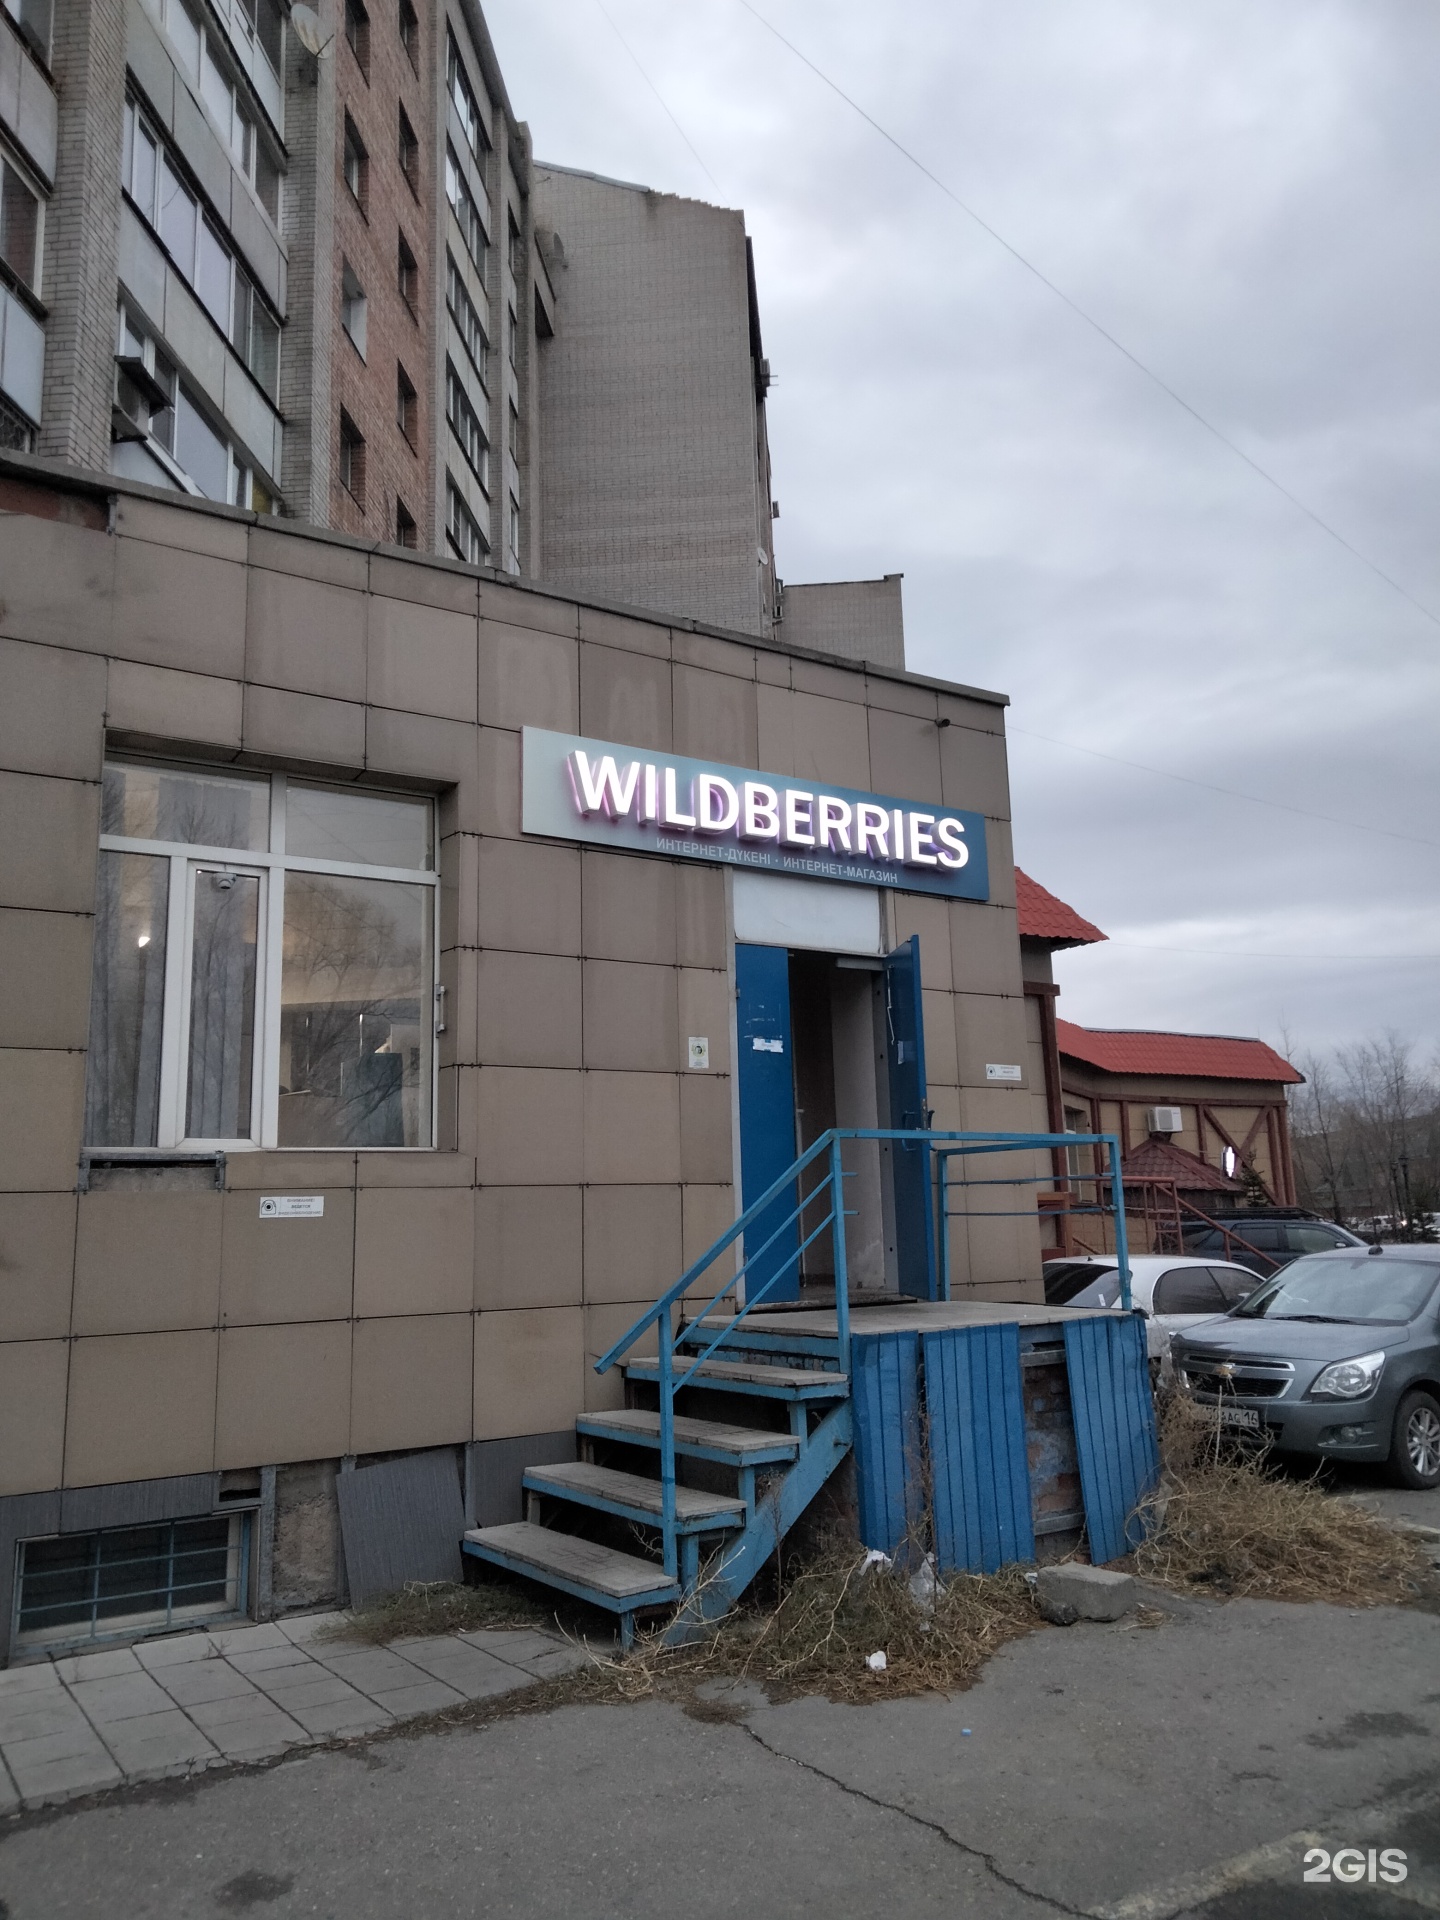 Wildberries Kz Интернет Магазин Усть Каменогорск